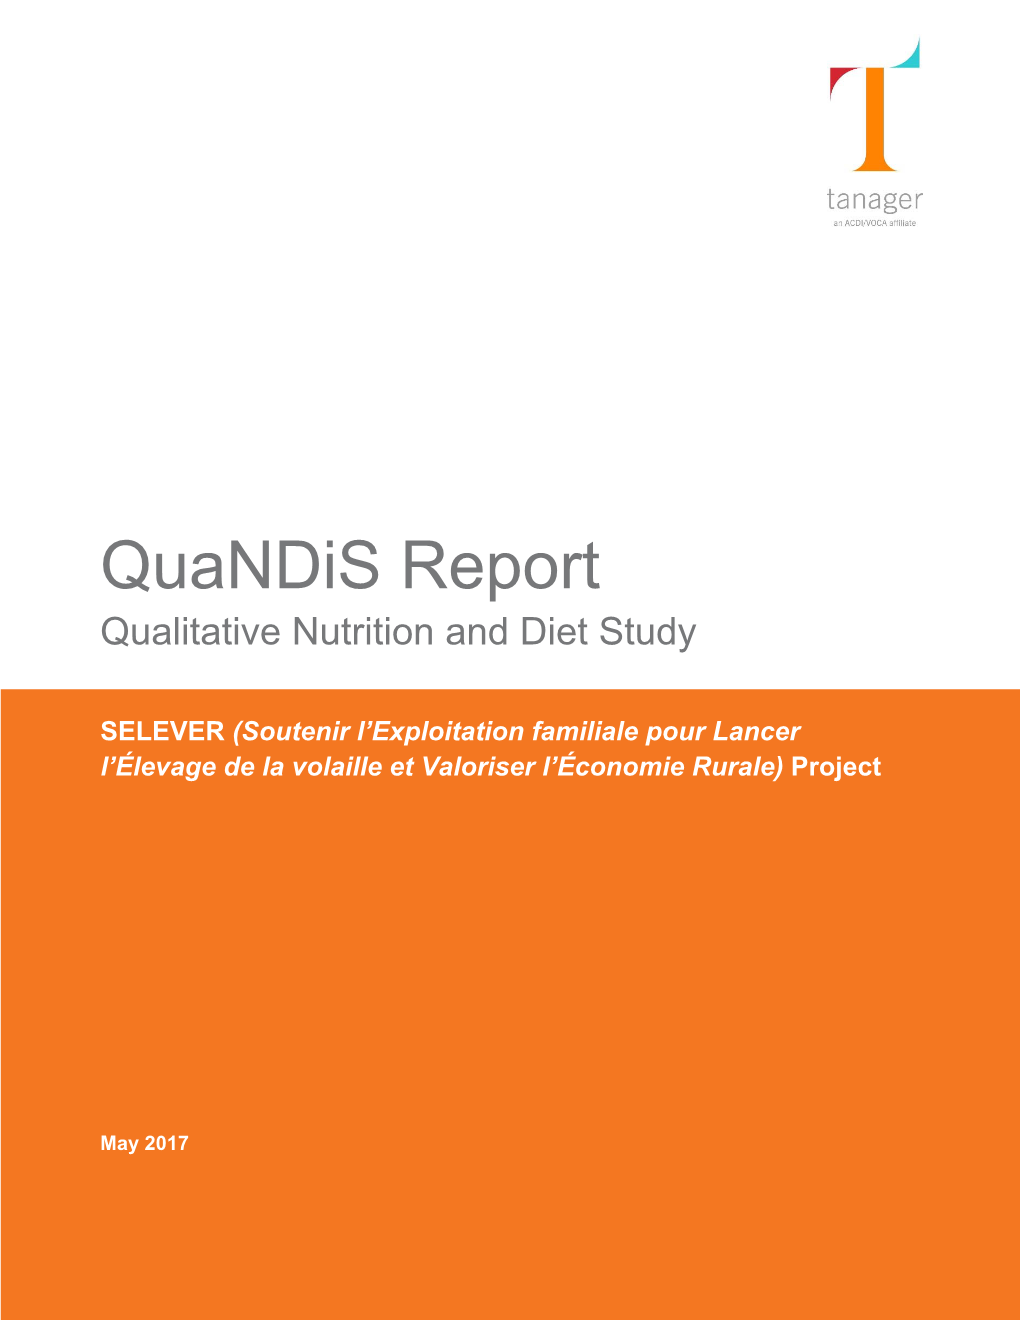 QUANDIS Report – Qualitative Nutrition and Diet Study